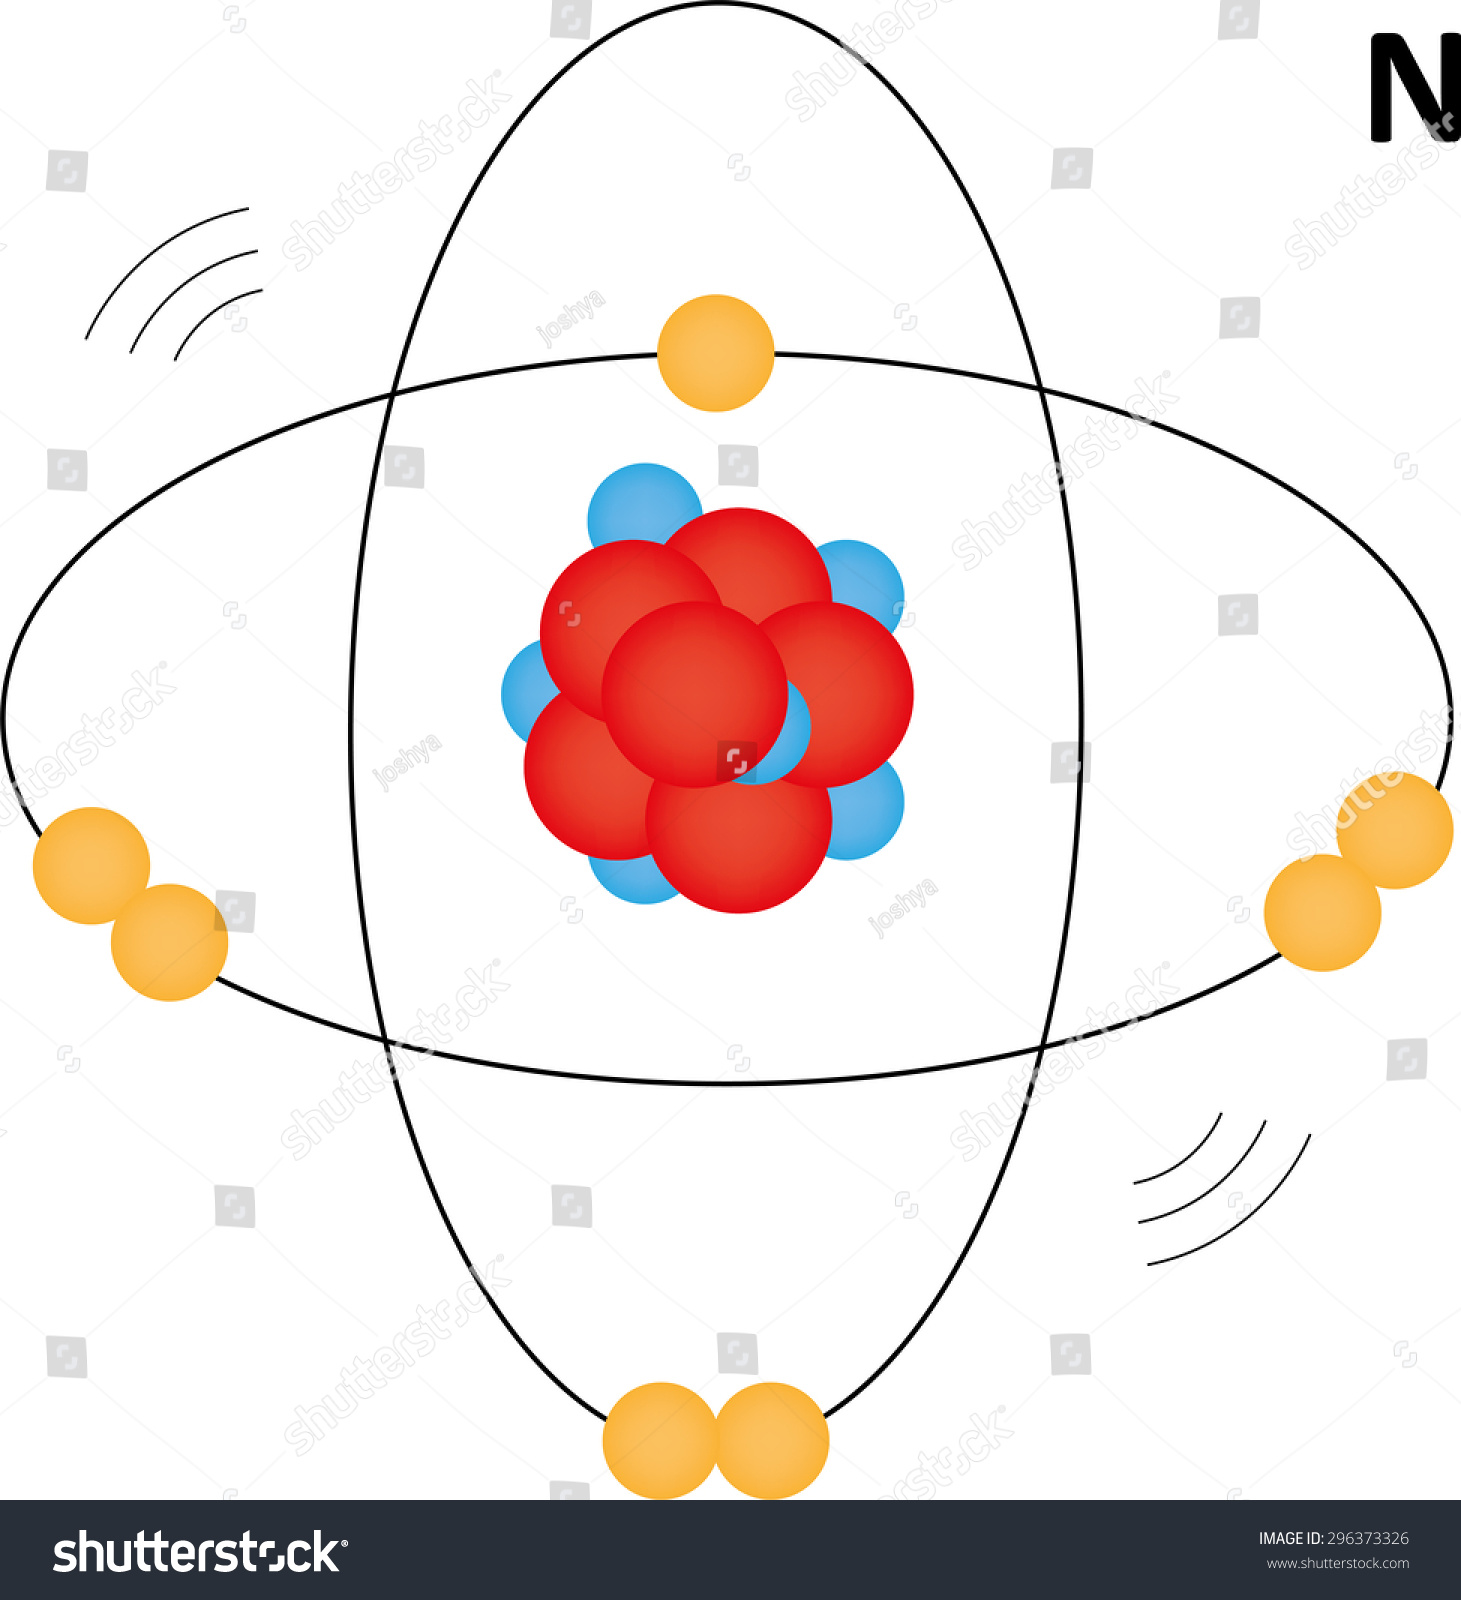 Изобразите схему атома и азота. Модель атома азота. Атомная модель азота. Модель атома азота рисунок. Атом азота рисунок.